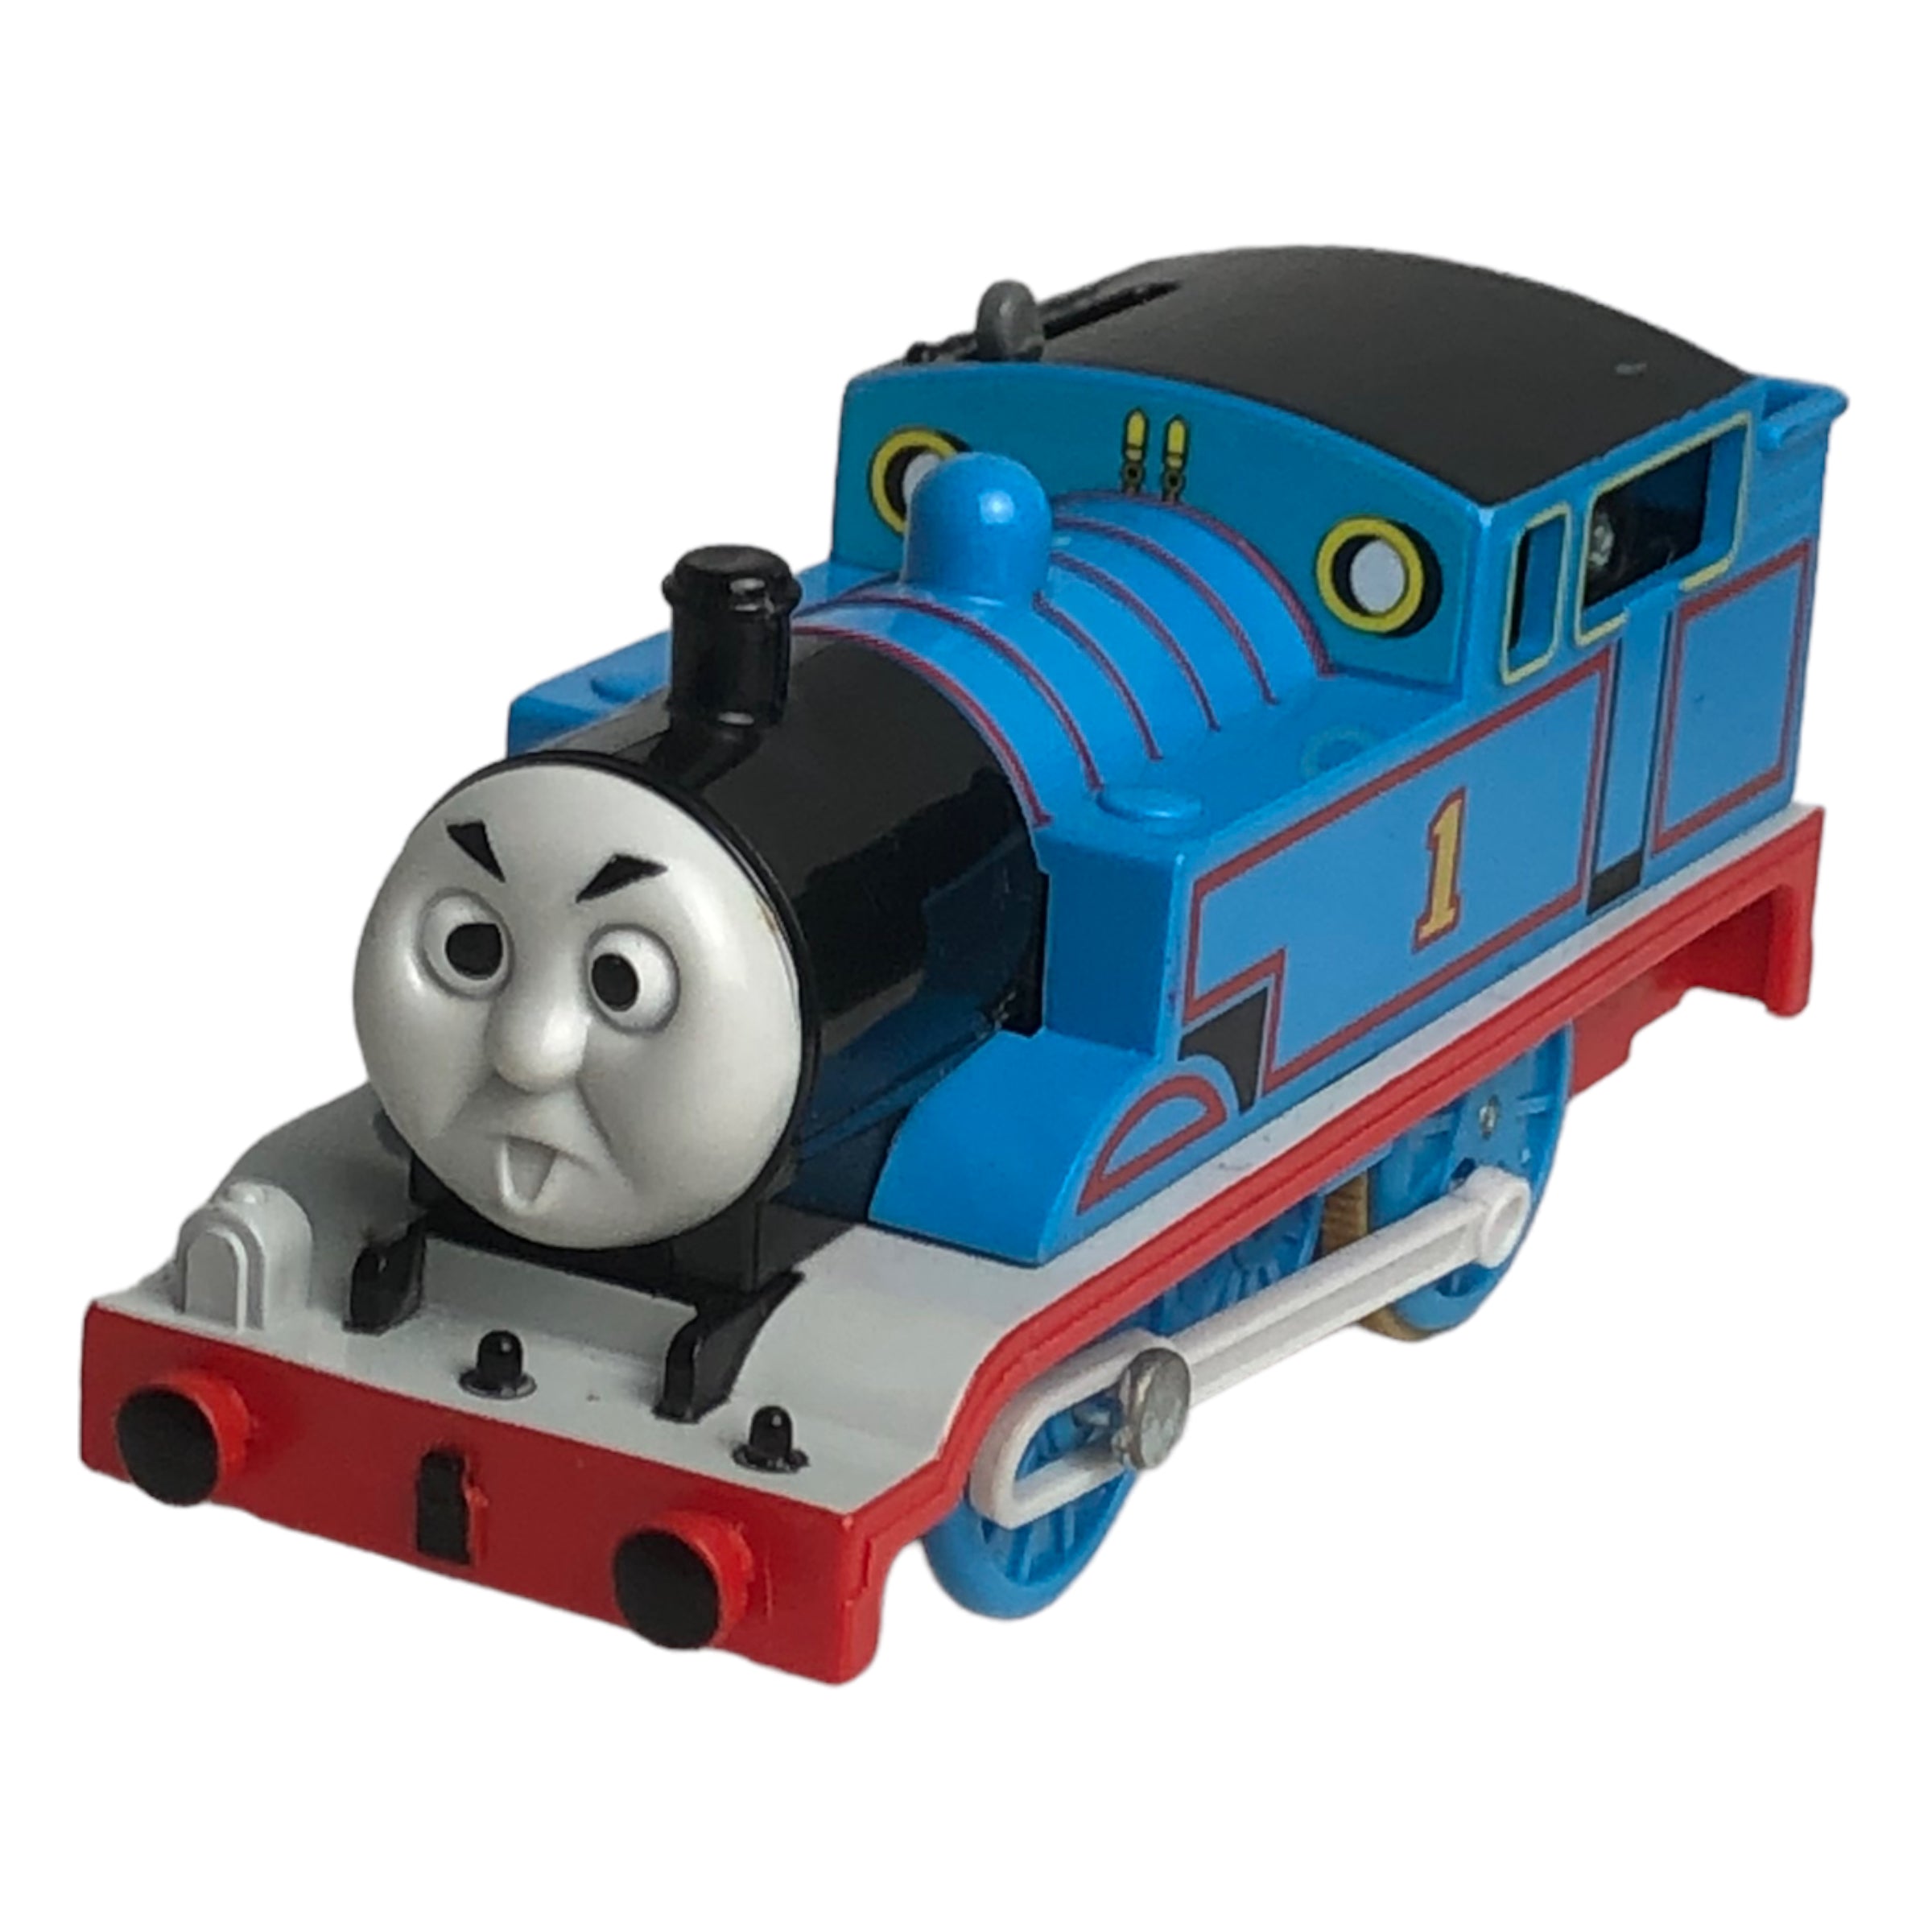 2002 Plarail Angry Shocked Thomas